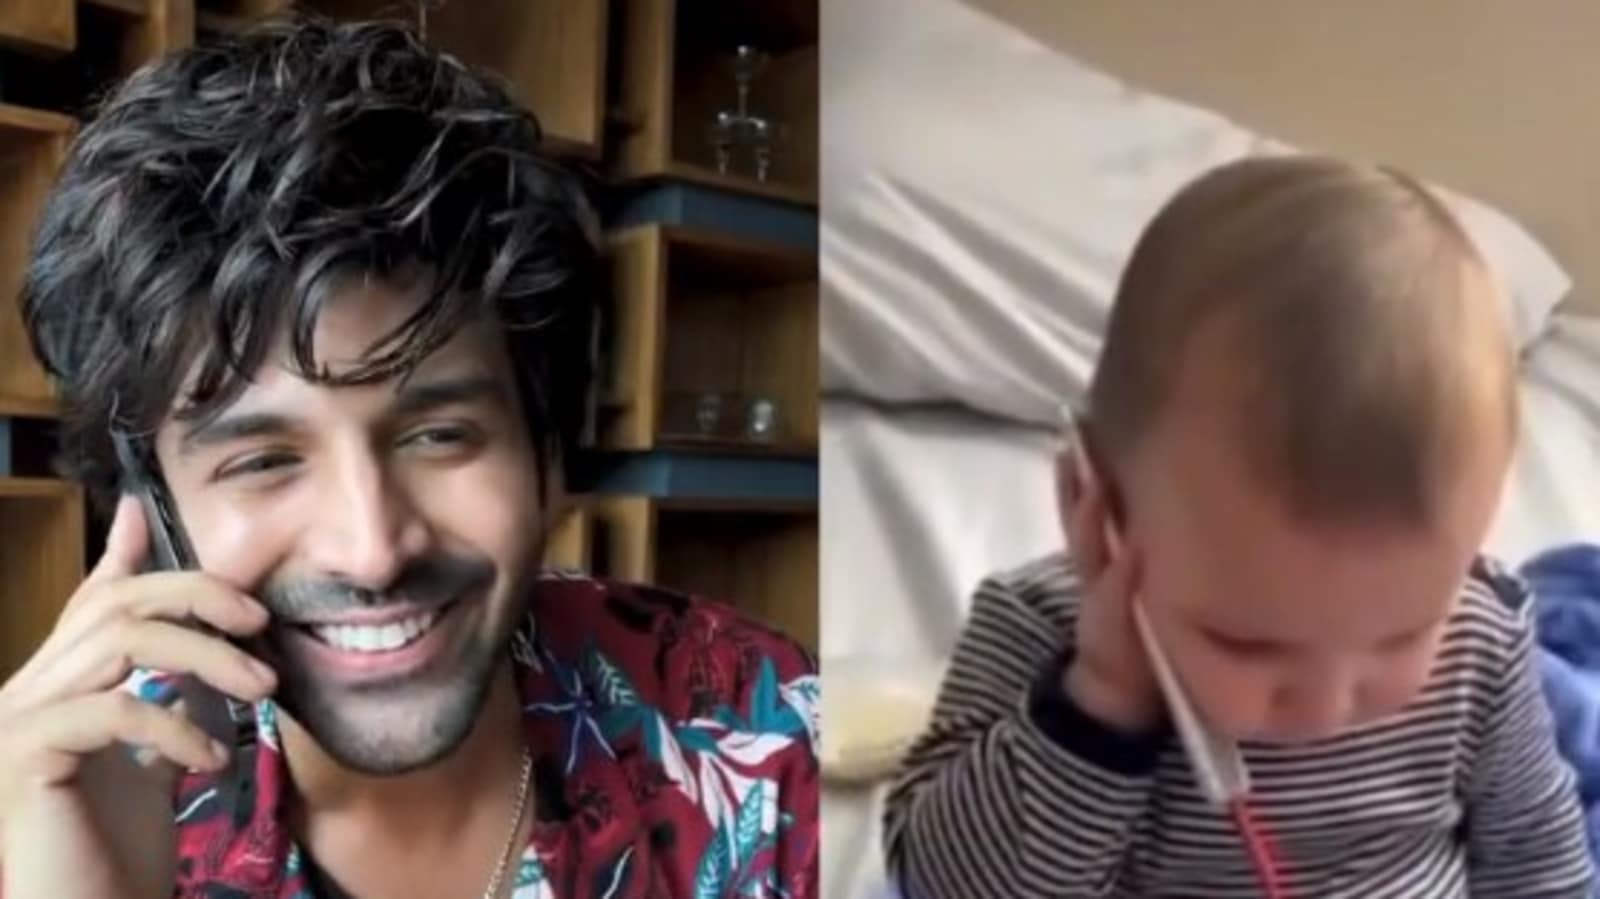 Kartik Aaryan ‘chats’ with a baby in hilarious mashup video: ‘Rona mat tu’